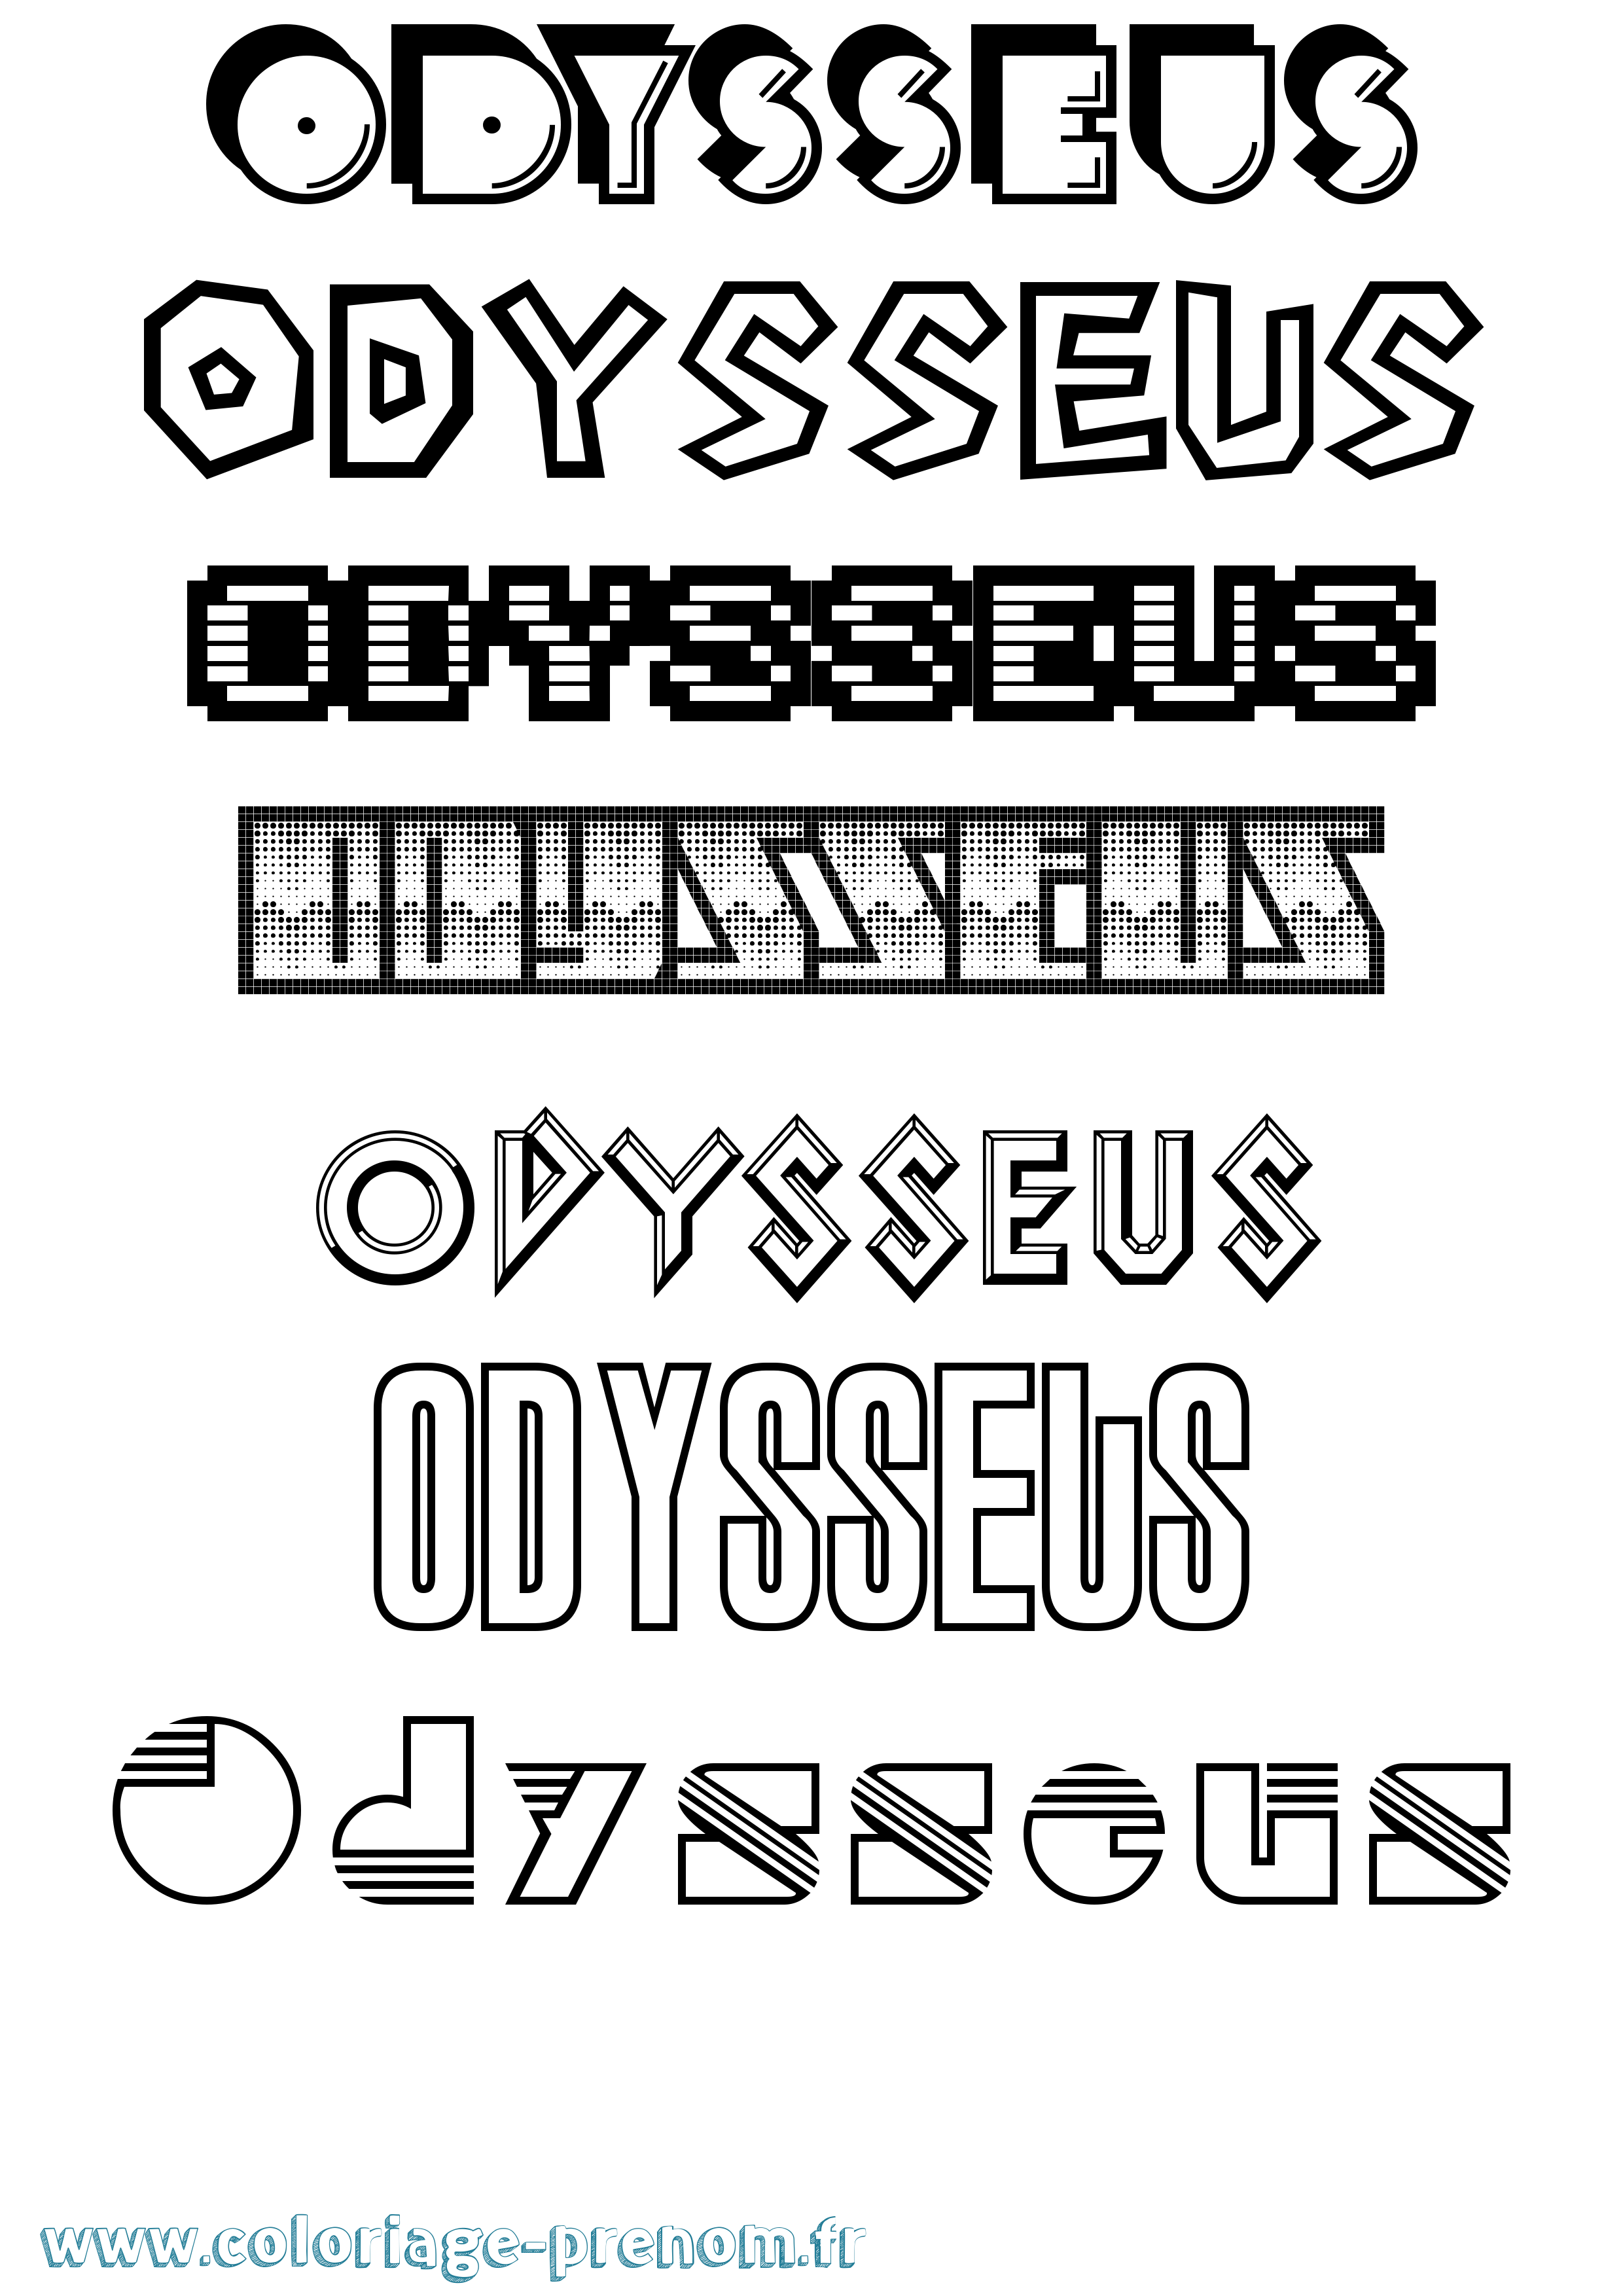 Coloriage prénom Odysseus Jeux Vidéos